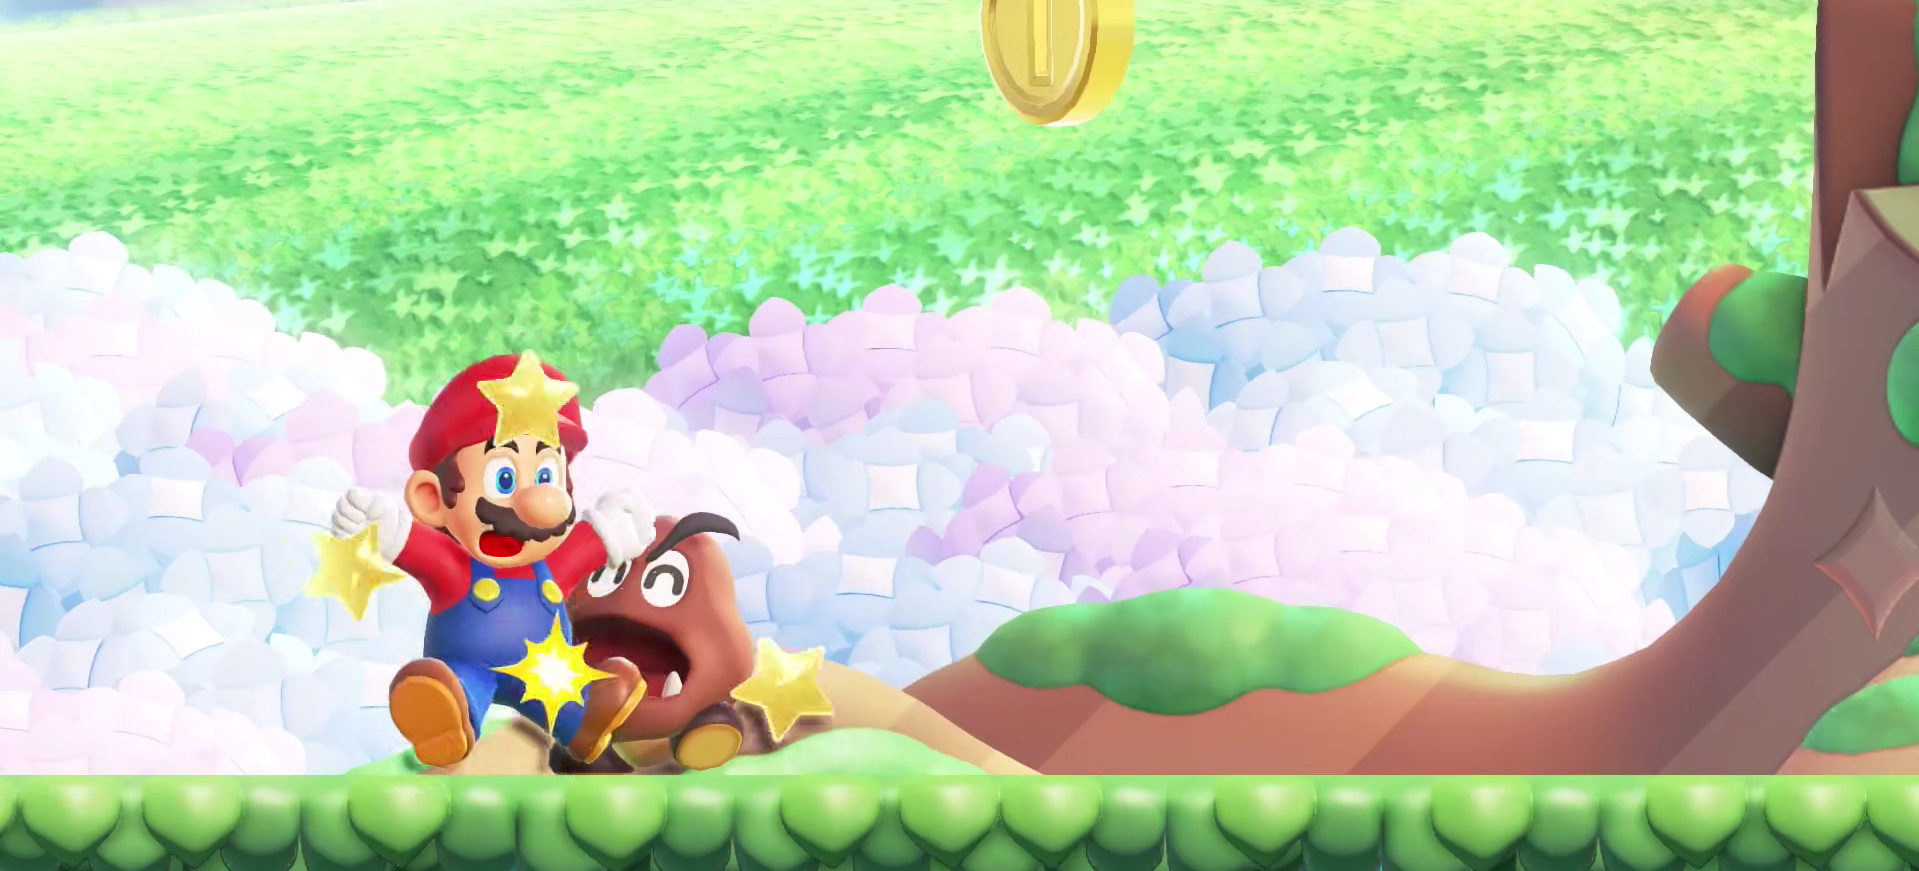 A Goomba biting Mario in Super Mario Bros. Wonder.